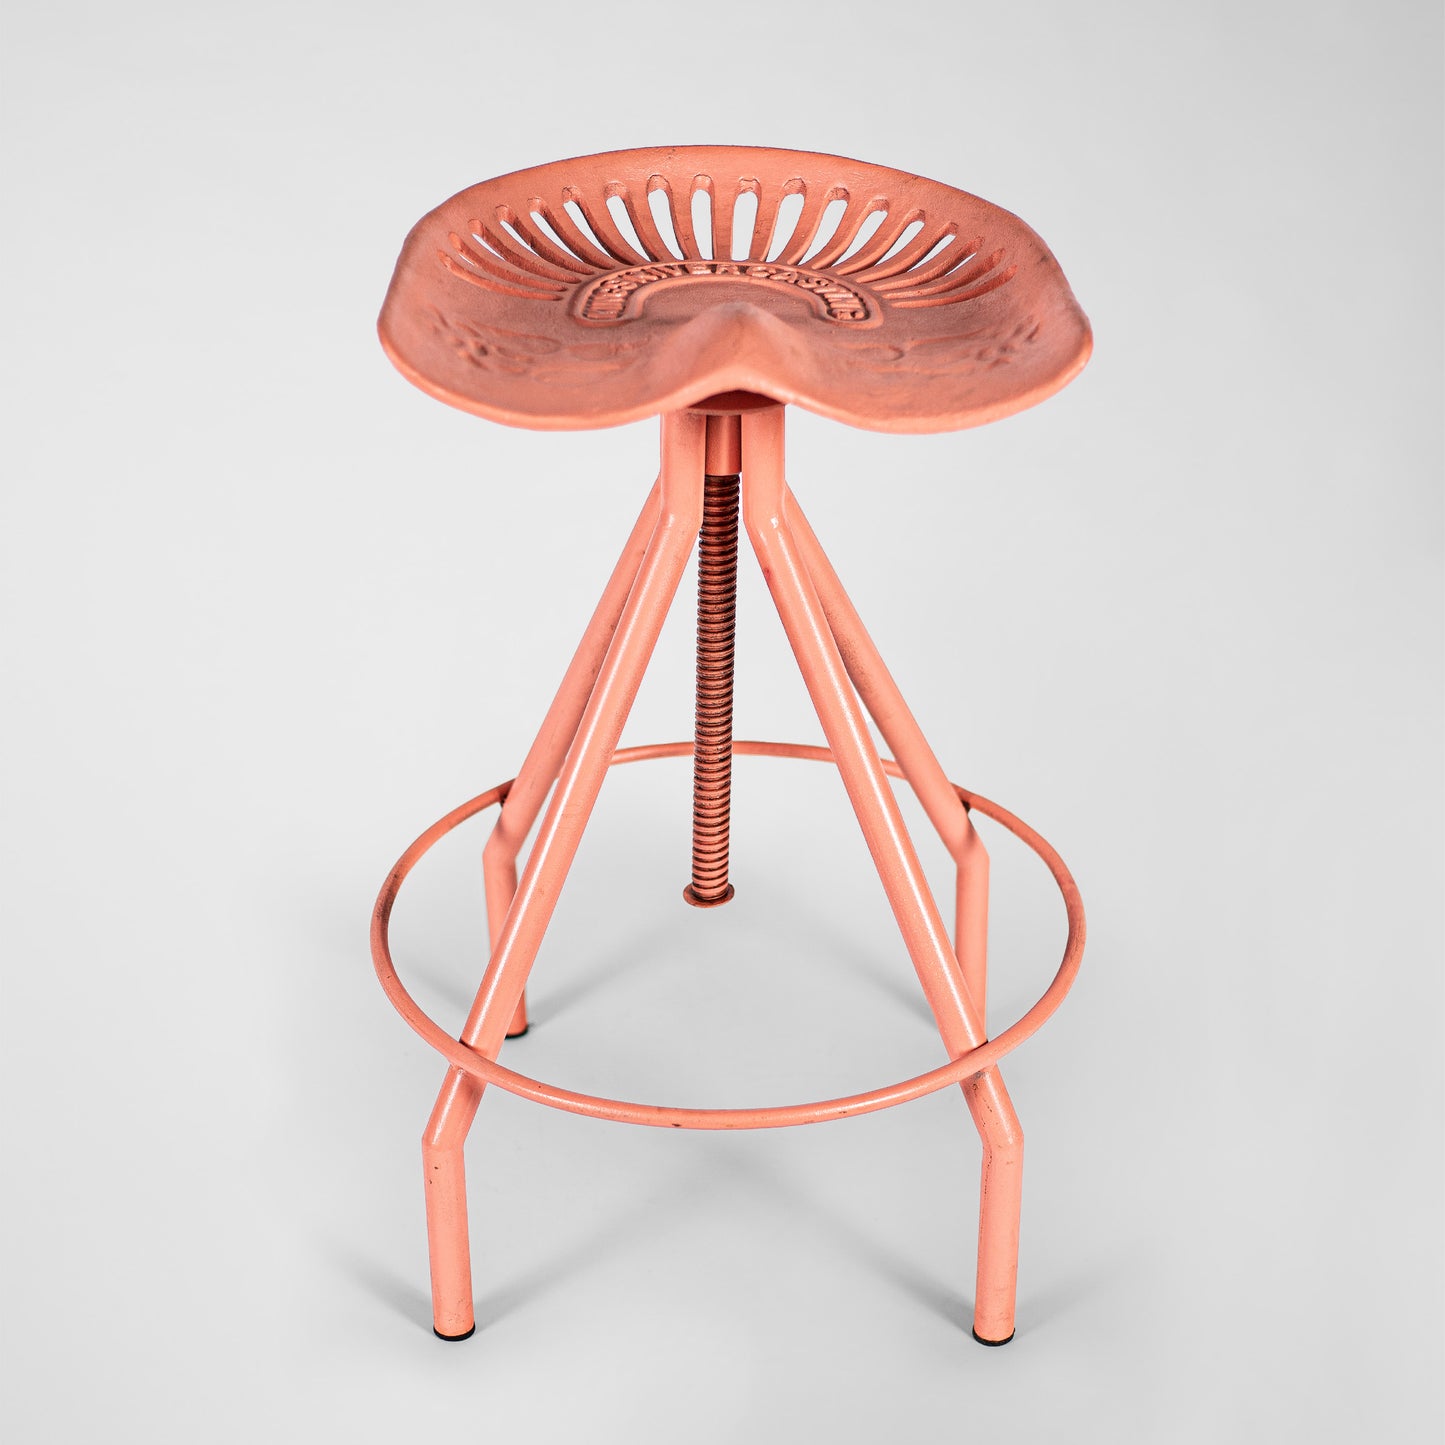 Greta Grease – Handmade Industrie-Design Dreh-Hocker aus Metall in flamingo rot